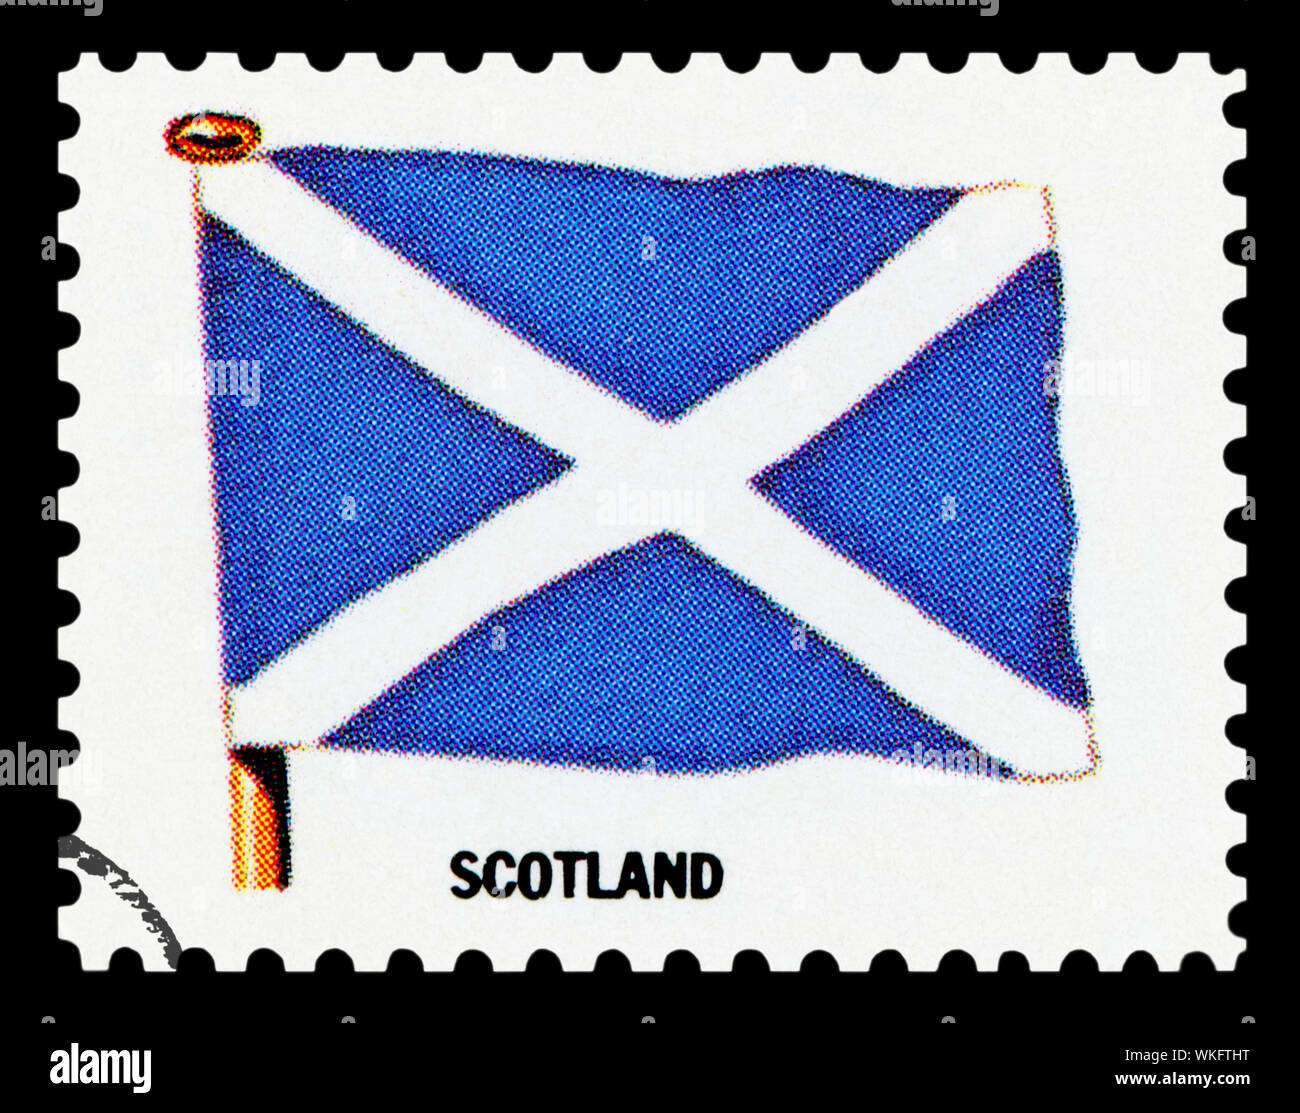 SCOTLAND FLAG - Postage Stamp isolated on black background. Stock Photo